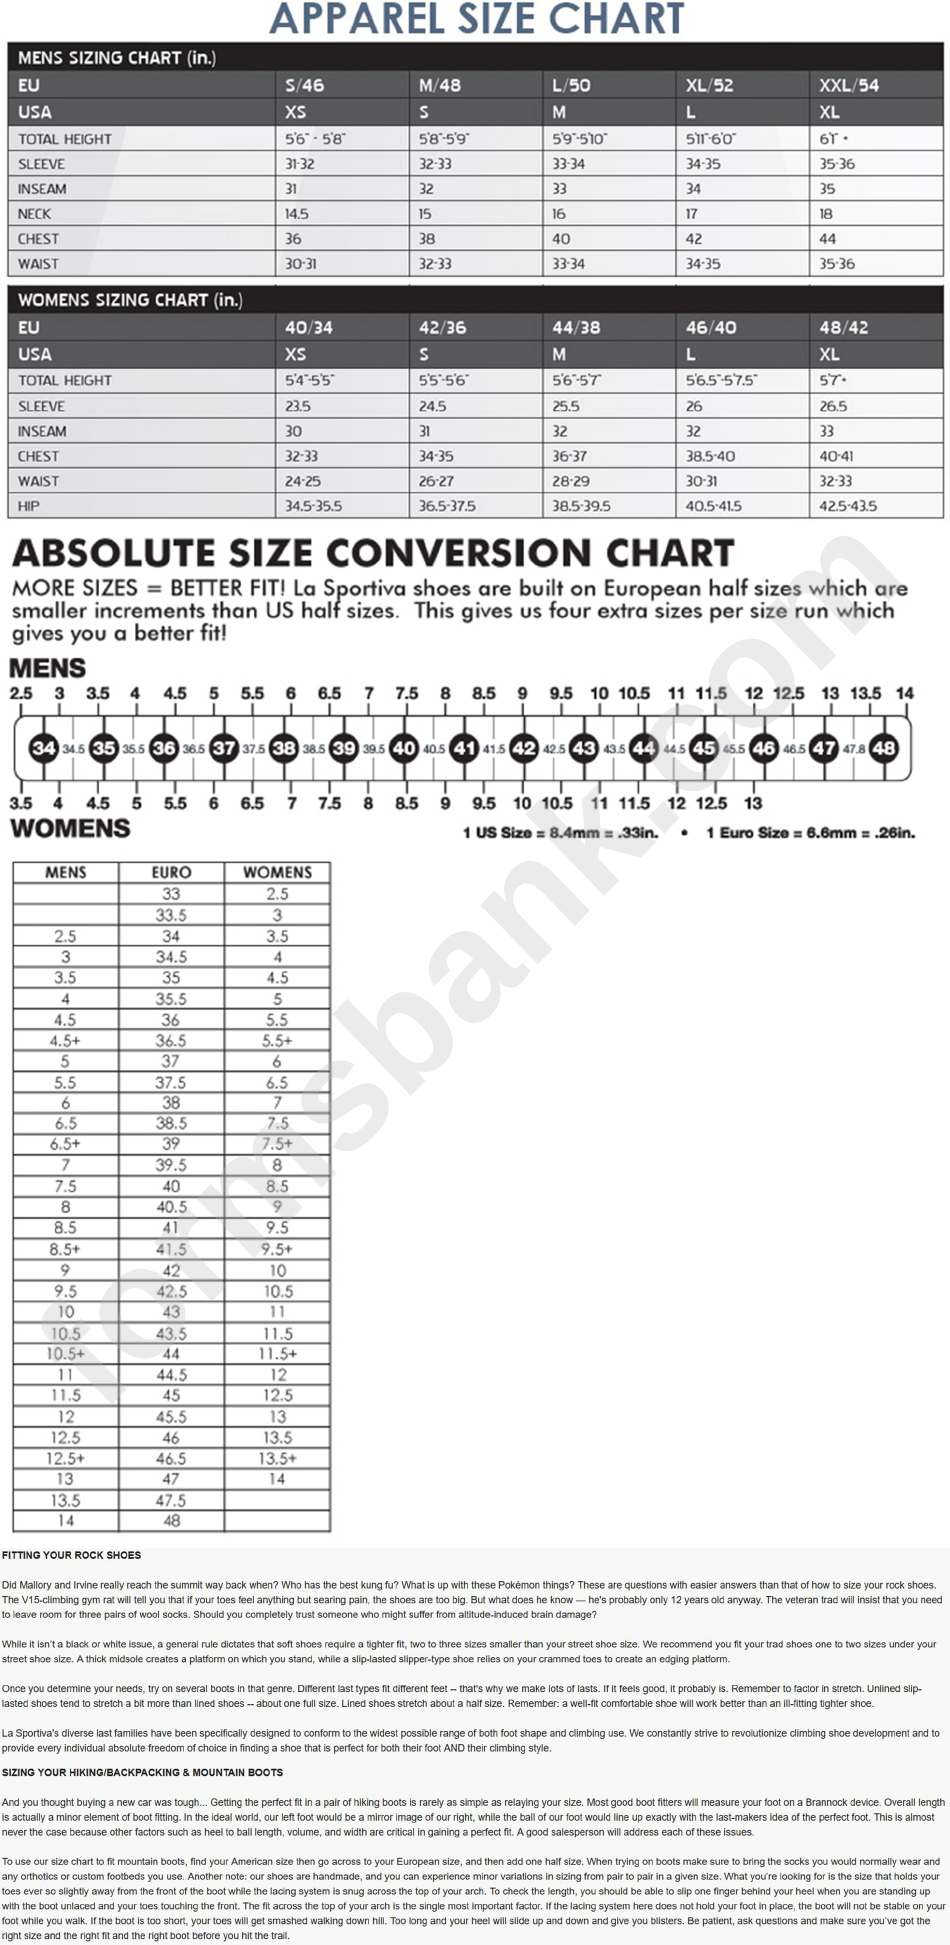 La Sportiva Apparel Size / Absolute Size Conversion Chart